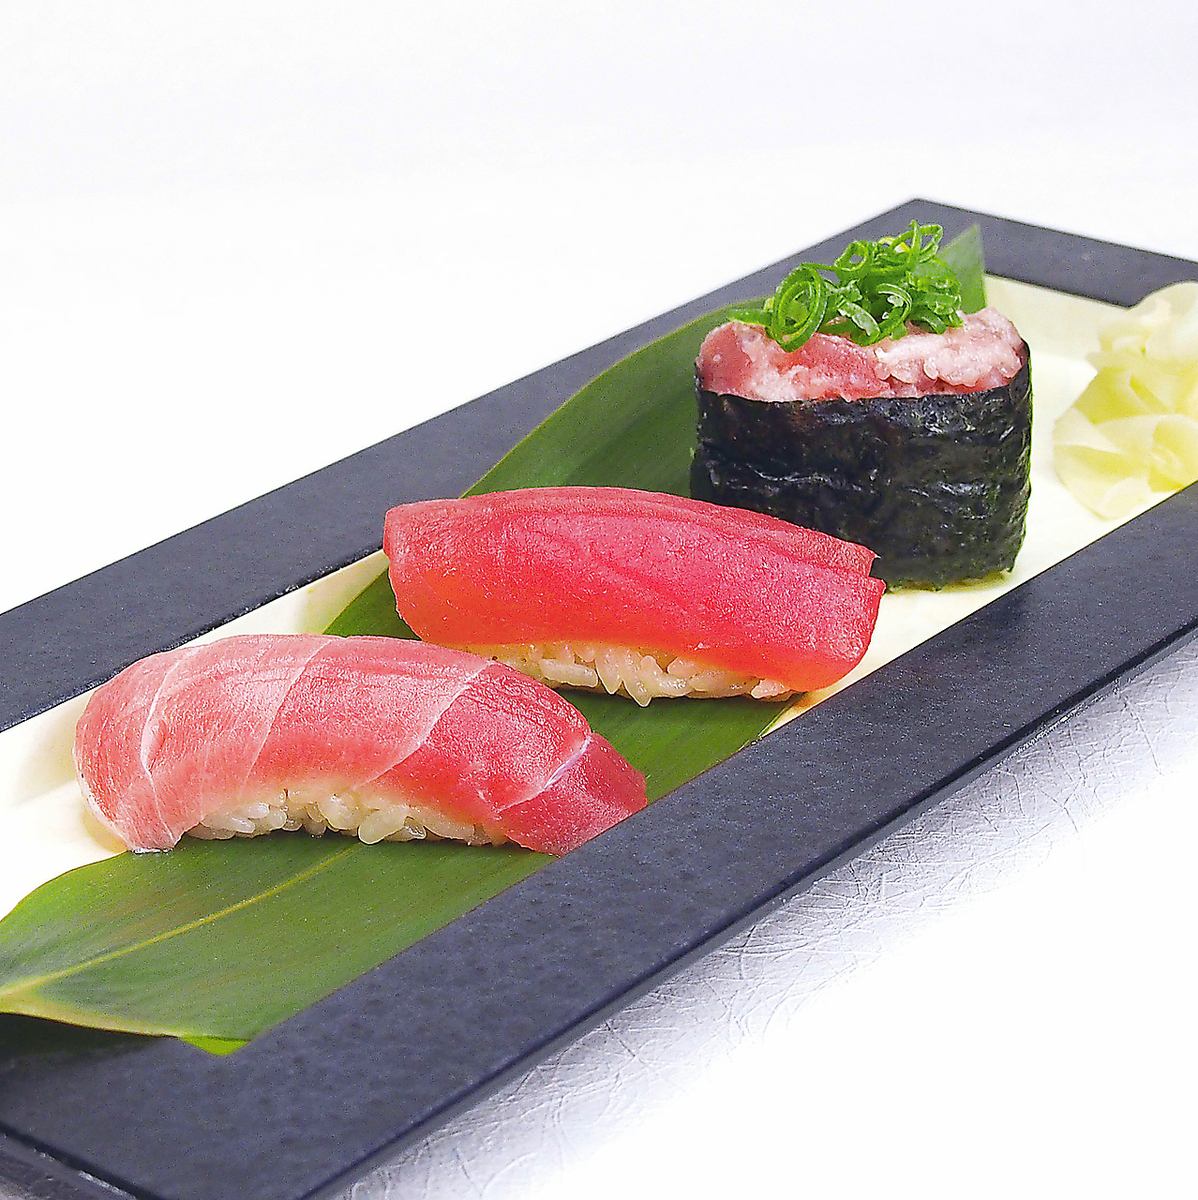 Authentic food at an affordable price! Enjoy raw tuna nigiri sushi and fresh scallops ♪